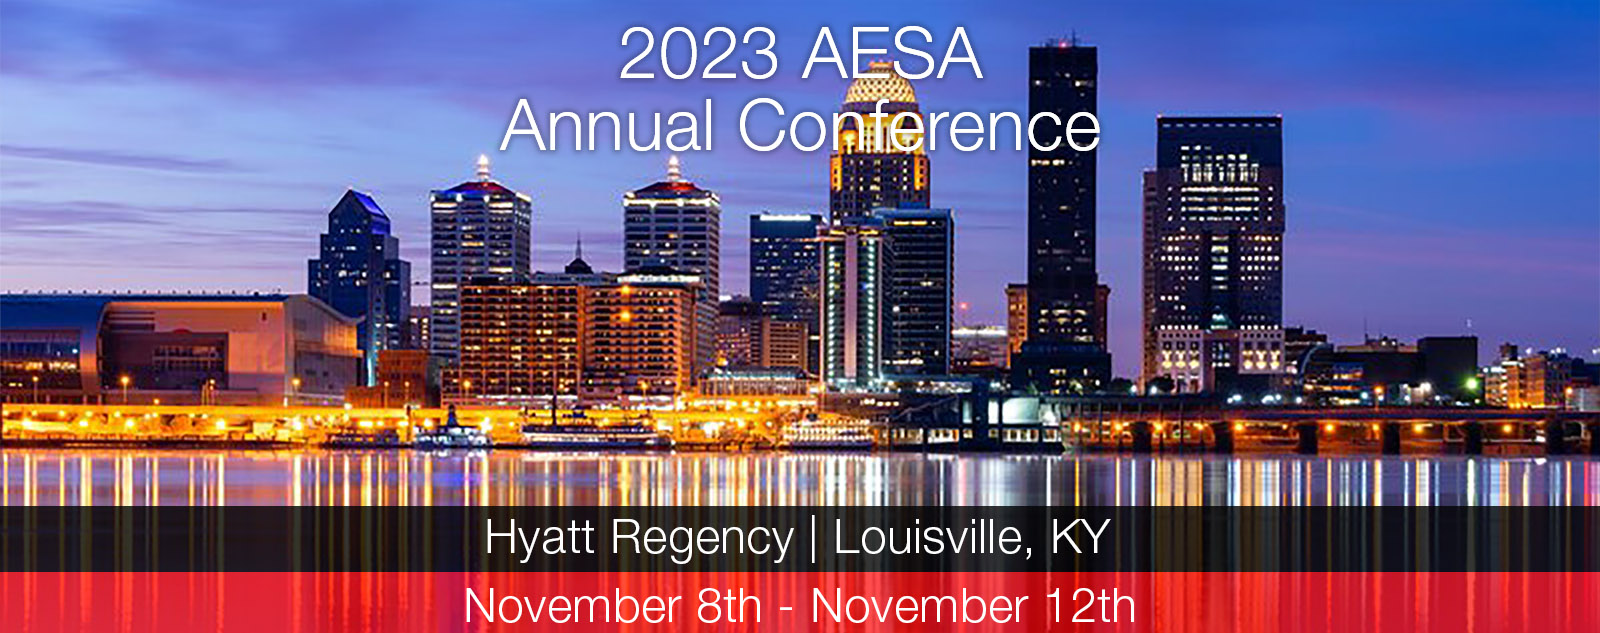 AESA 2023 Annual Conference, Louisville KY, Hyatt Regency, Nov 8th thru Nov 12th